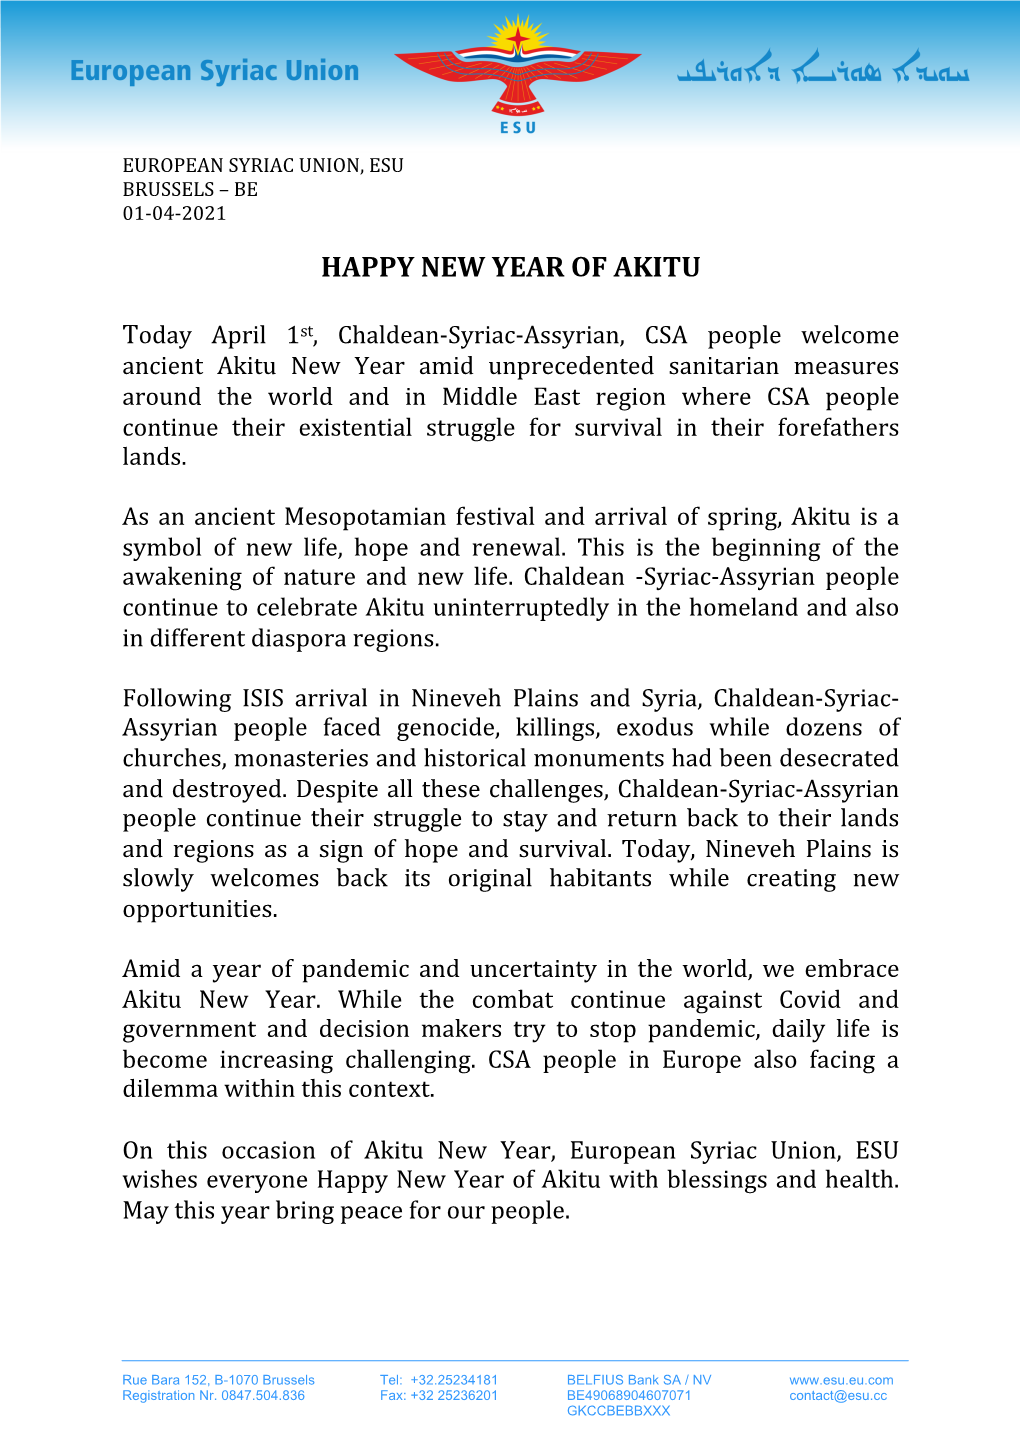 Happy New Year of Akitu